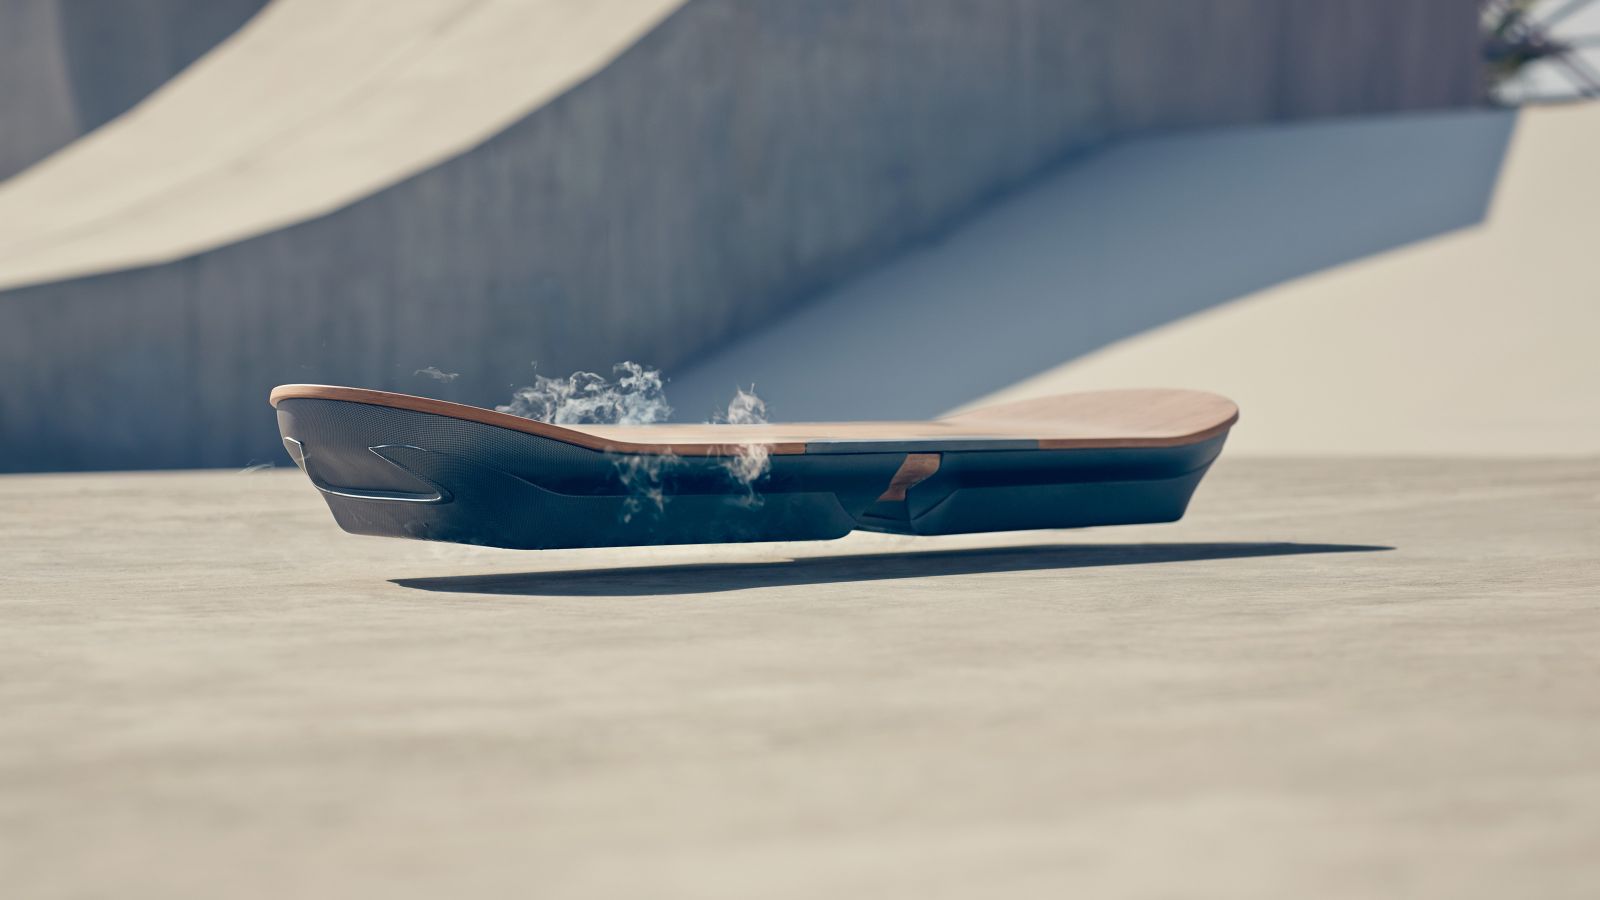 Revolutionär: Lexus präsentiert erstes Hoverboard der Welt